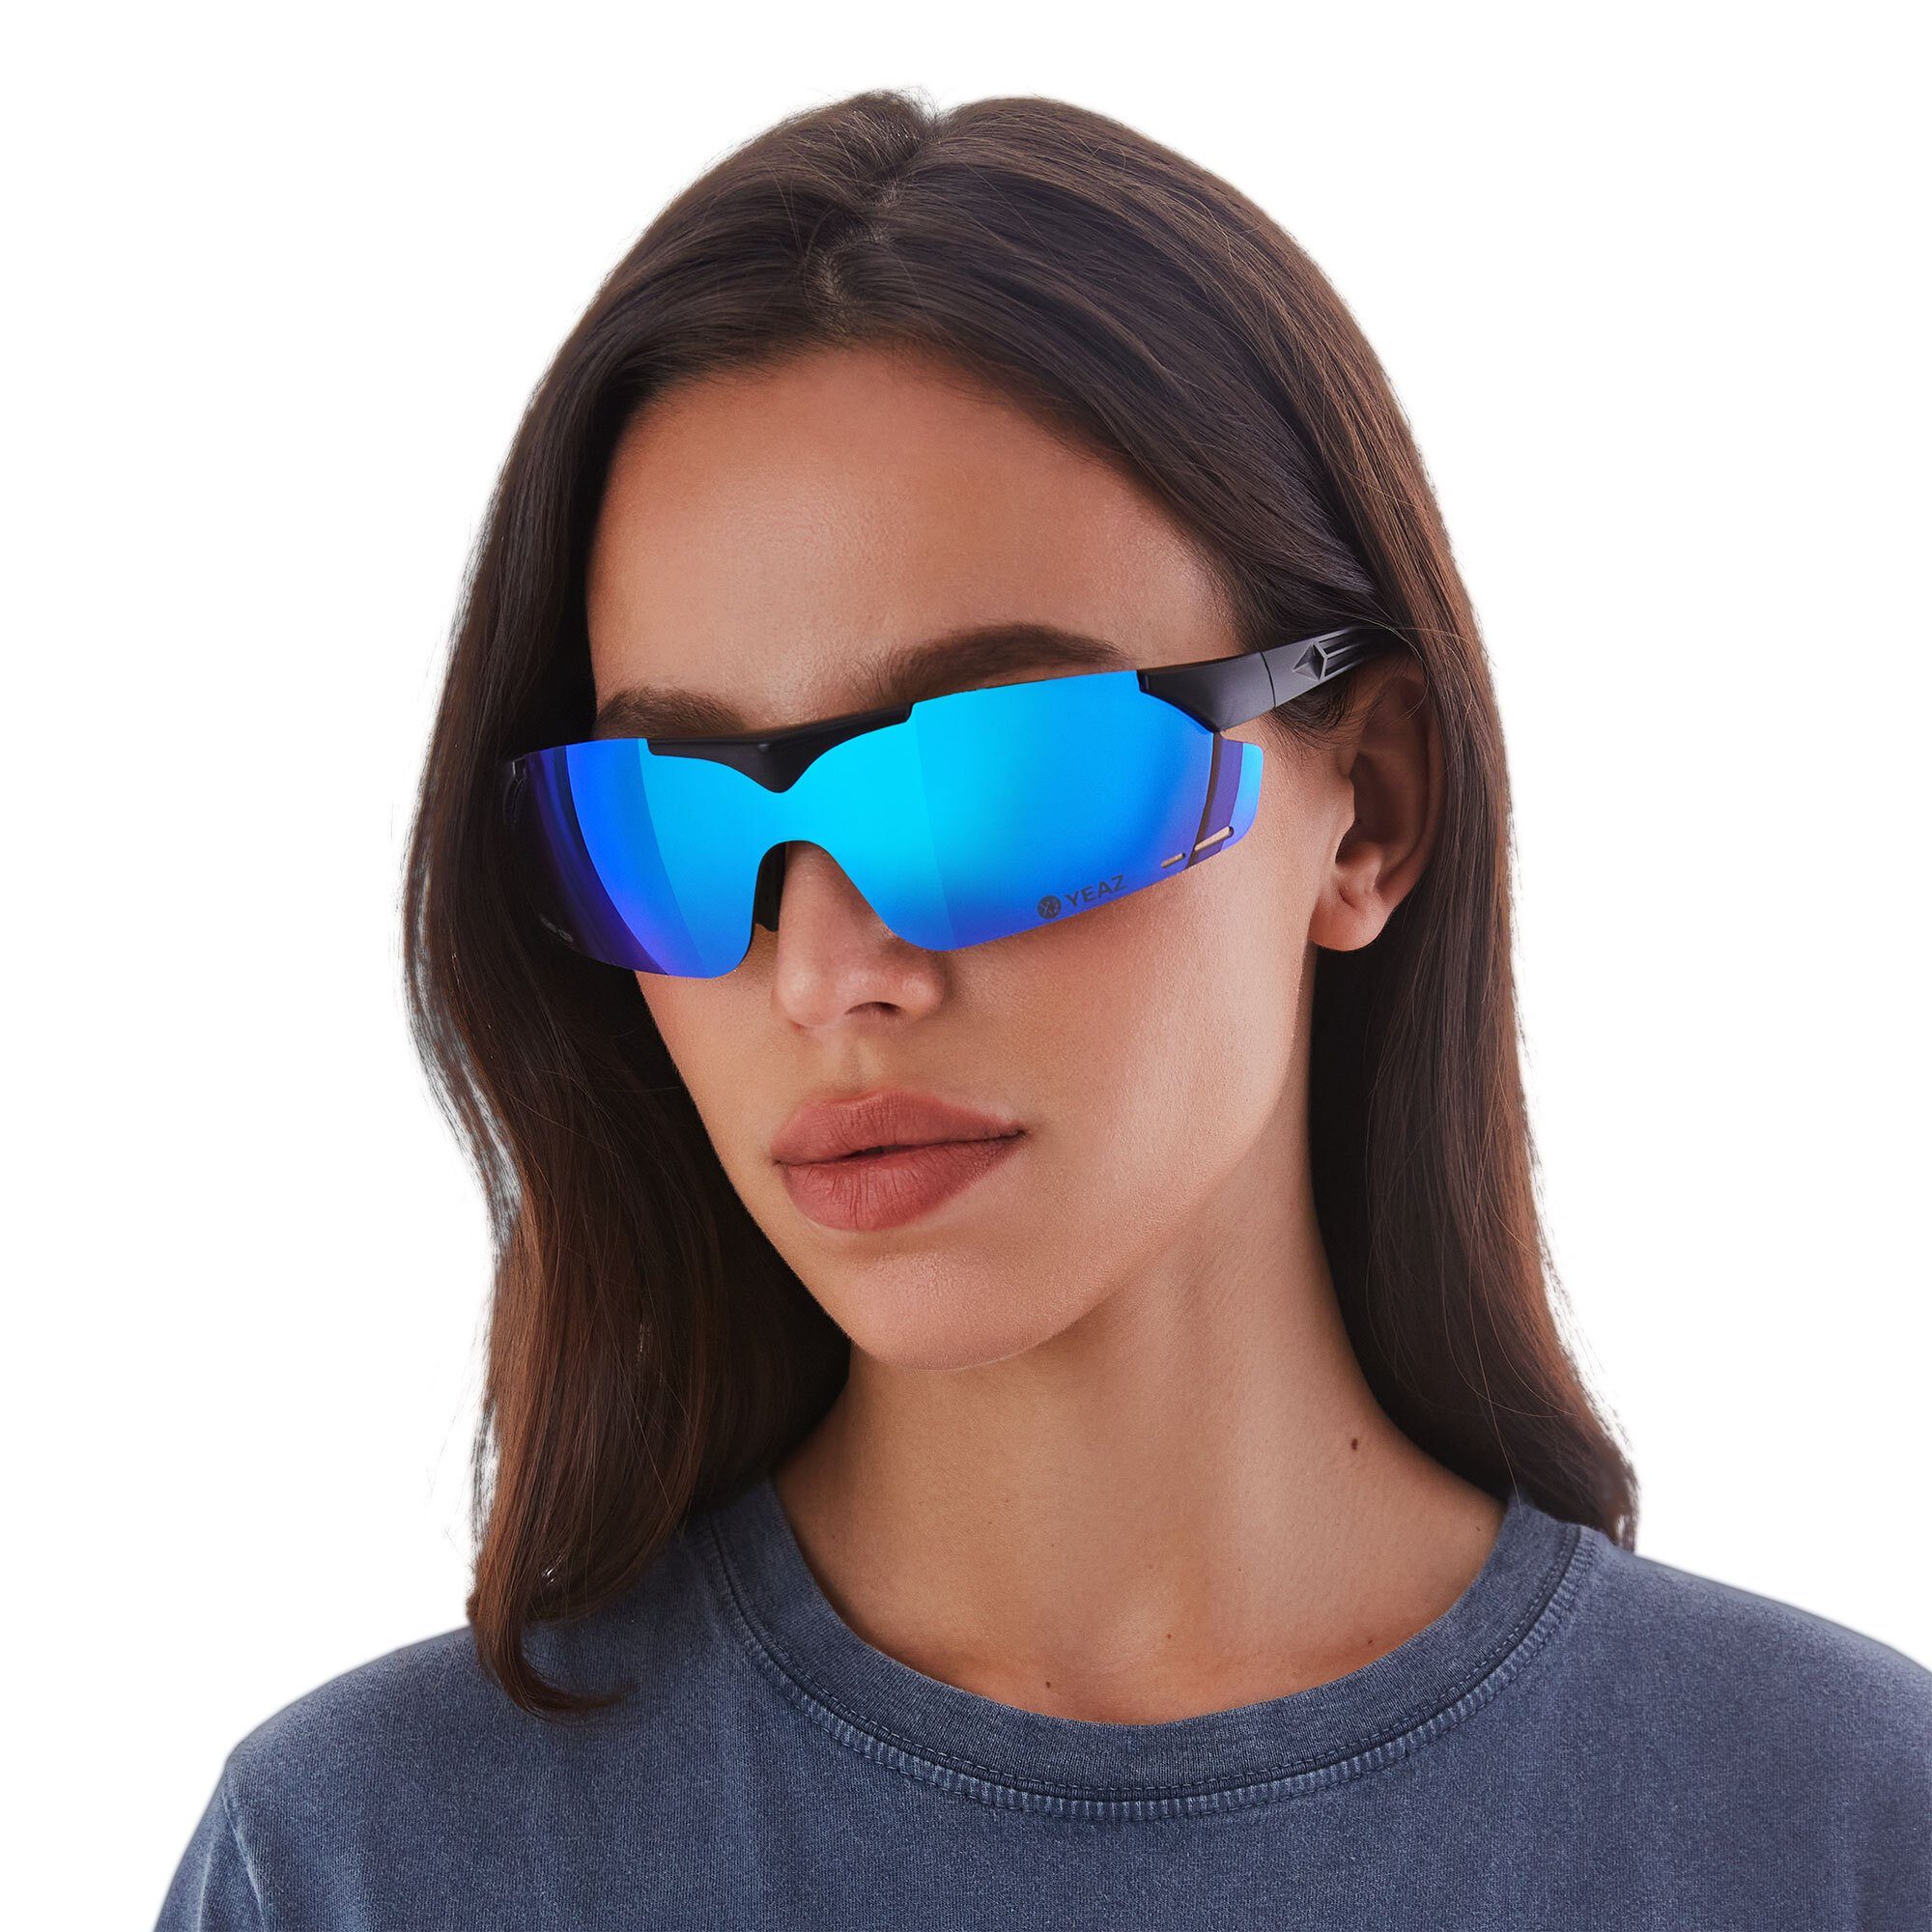 YEAZ Magnetsystem magnet-sport-sonnenbrille, mit SUNUP Sportbrille Sport-Sonnenbrille